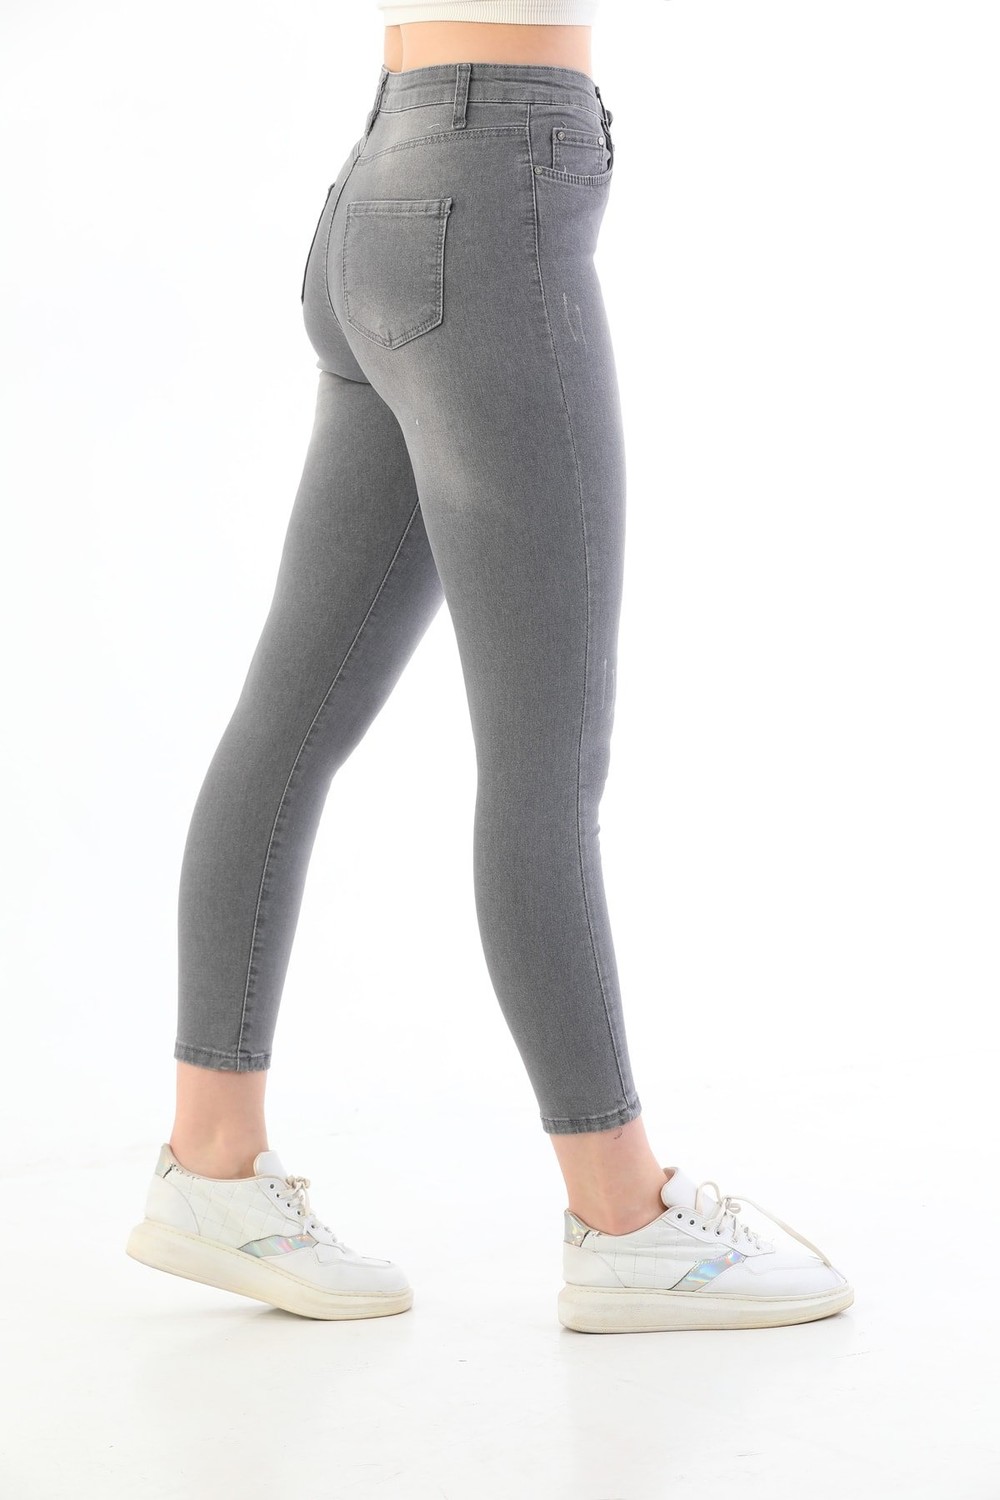 BİKELİFE Gray Nail Detail Plus Size High Waist Lycra Denim Trousers.